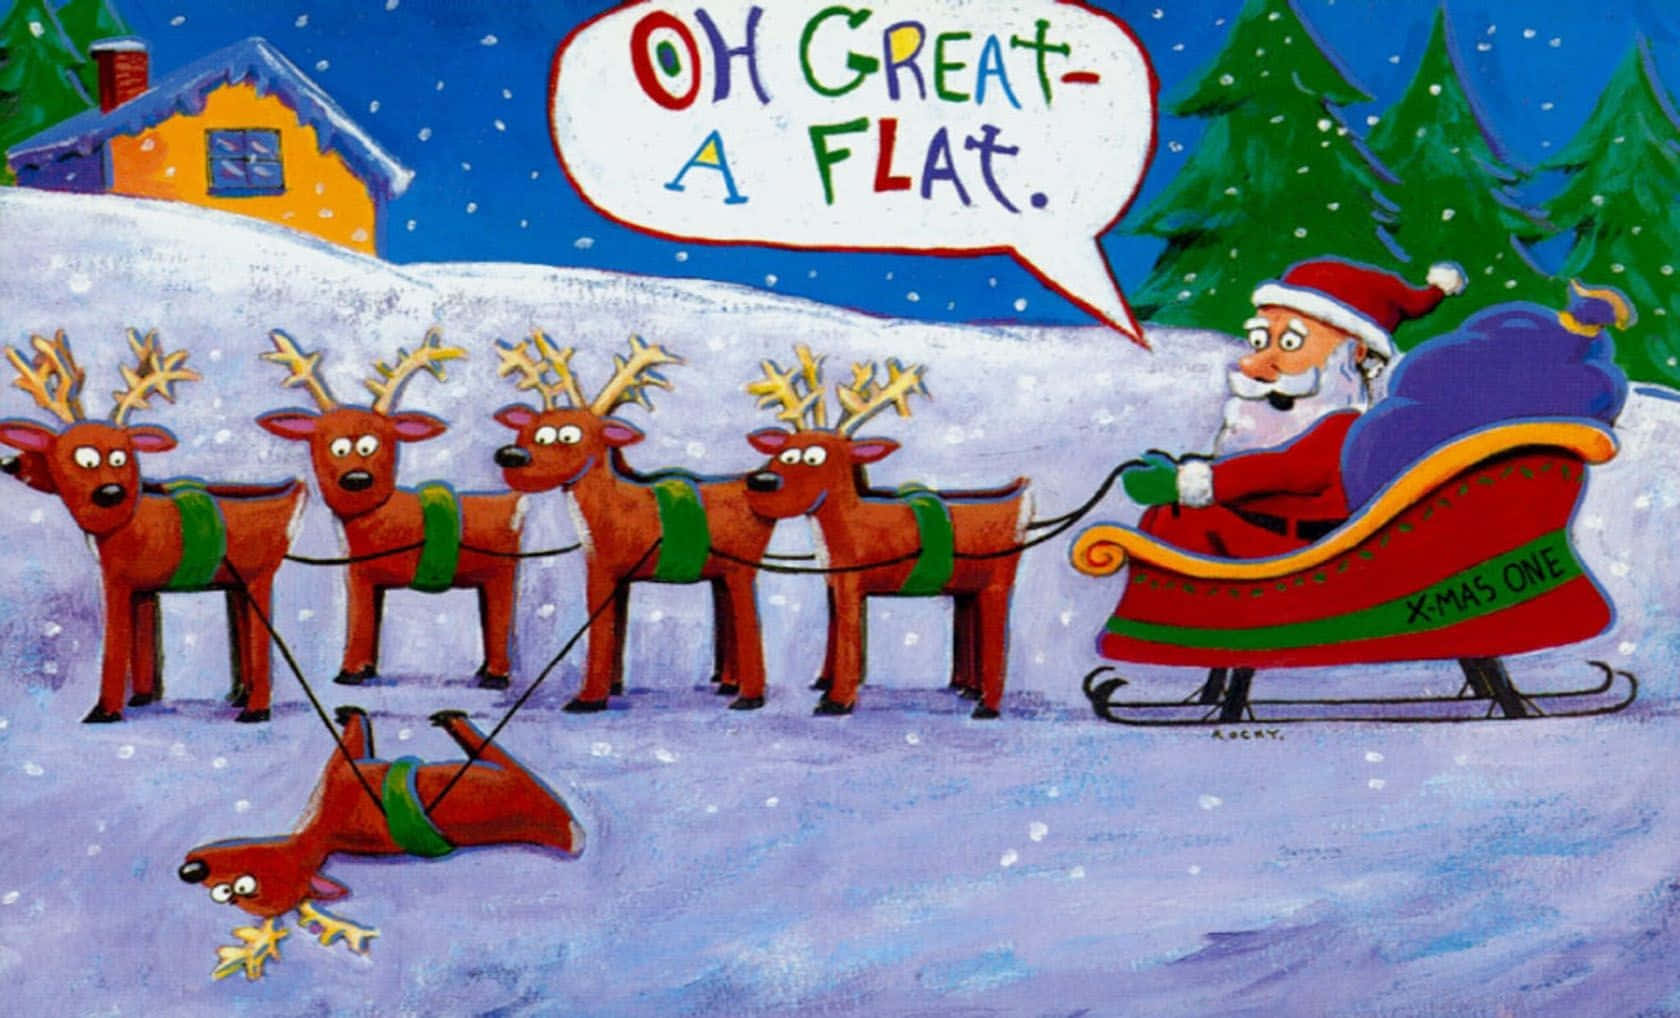 A hilarious twist on holiday cheer – Santa Claus riding a unicorn